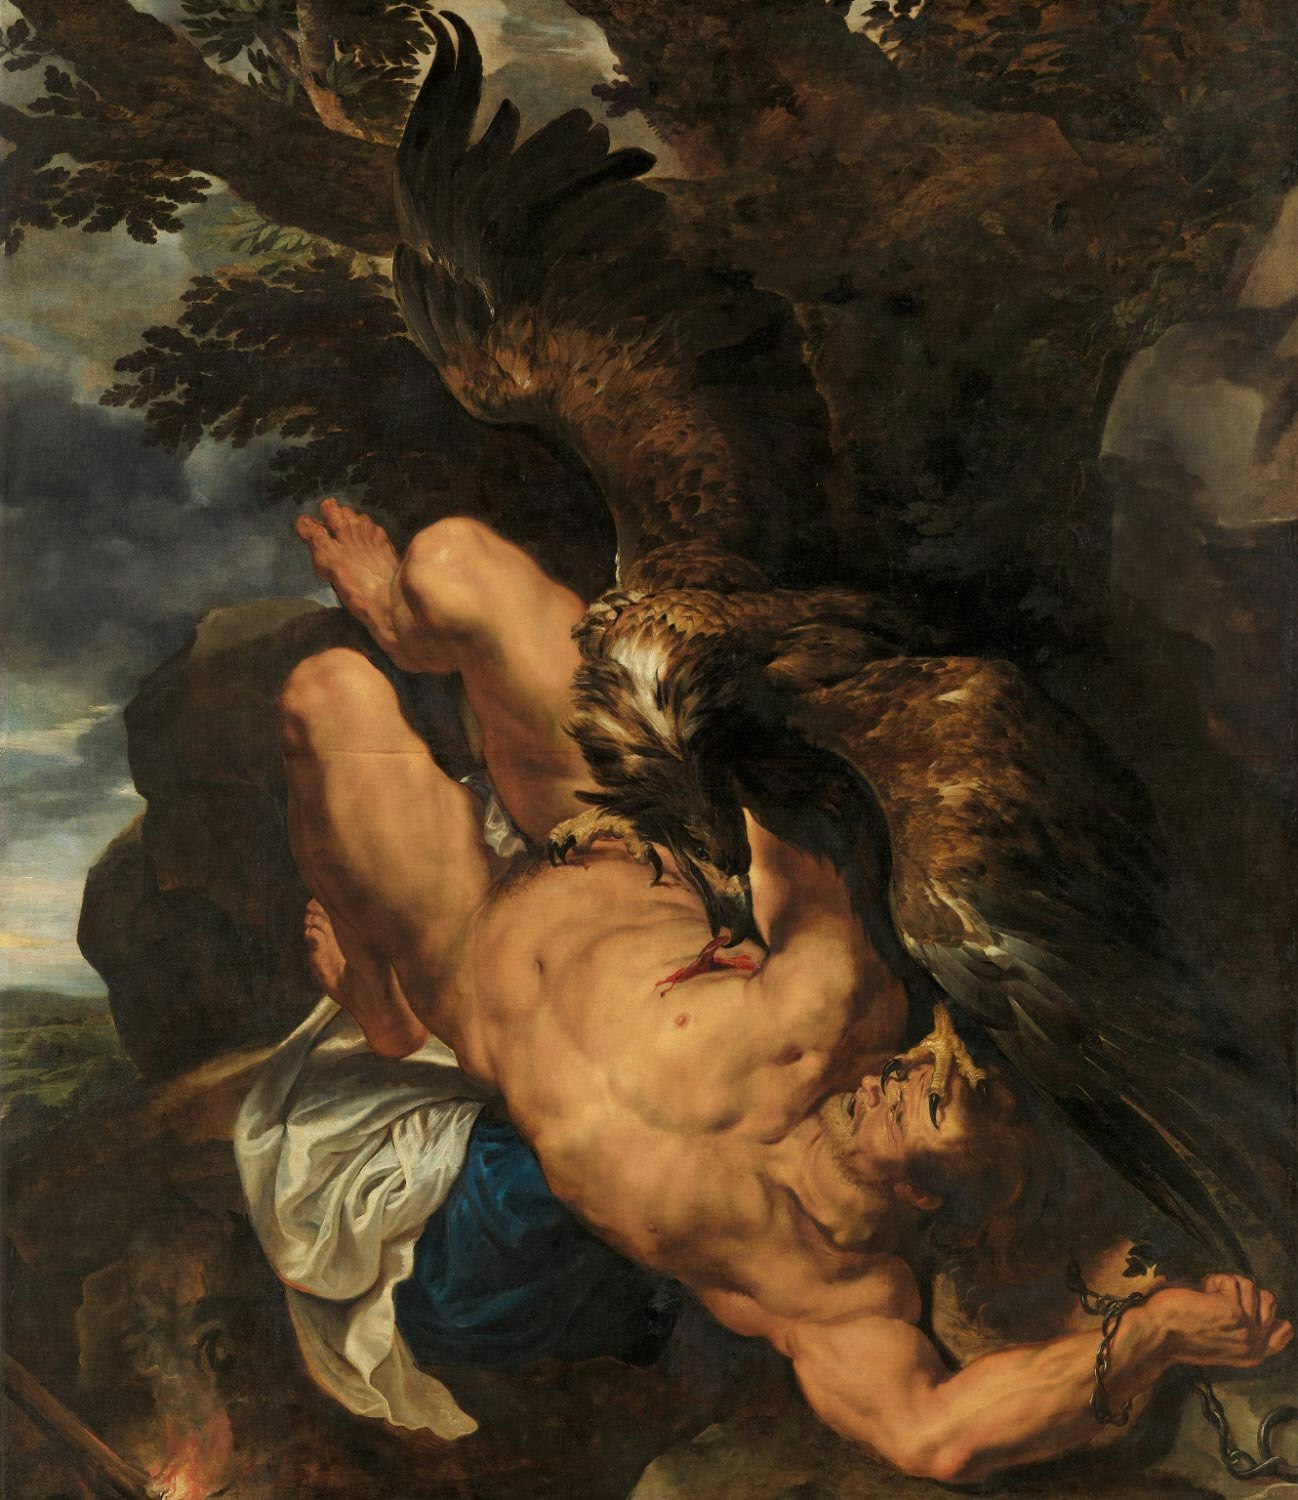 Prometheus Bound painting by Peter Paul Rubens, 1618